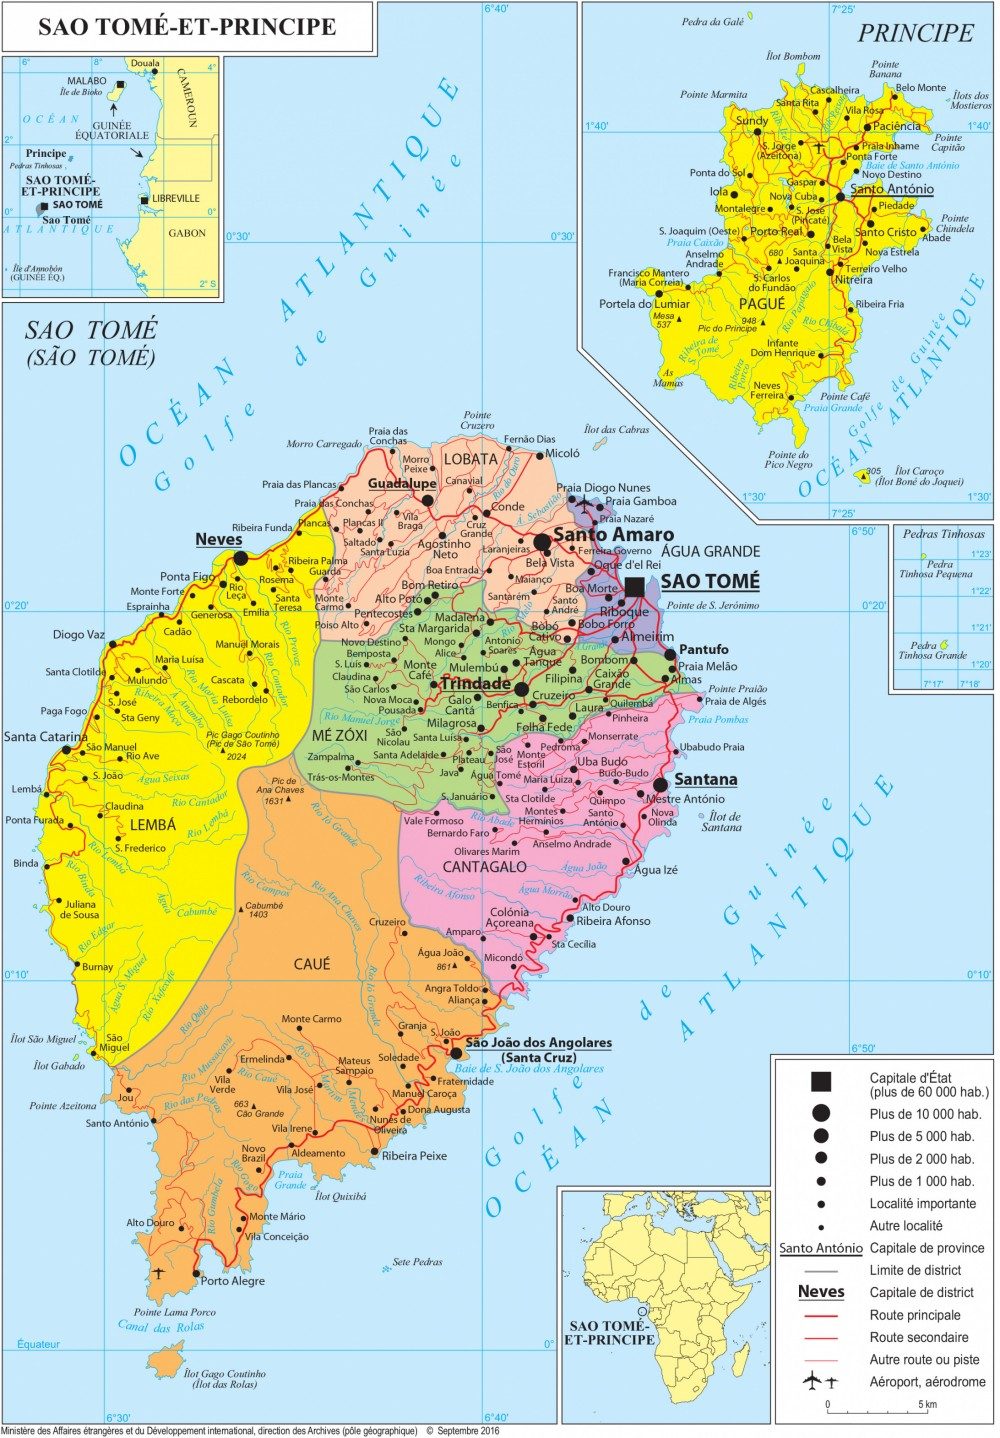 [Update] Bản đồ nước São Tomé và Príncipe (Sao Tome and Principe Map) năm 2022 14